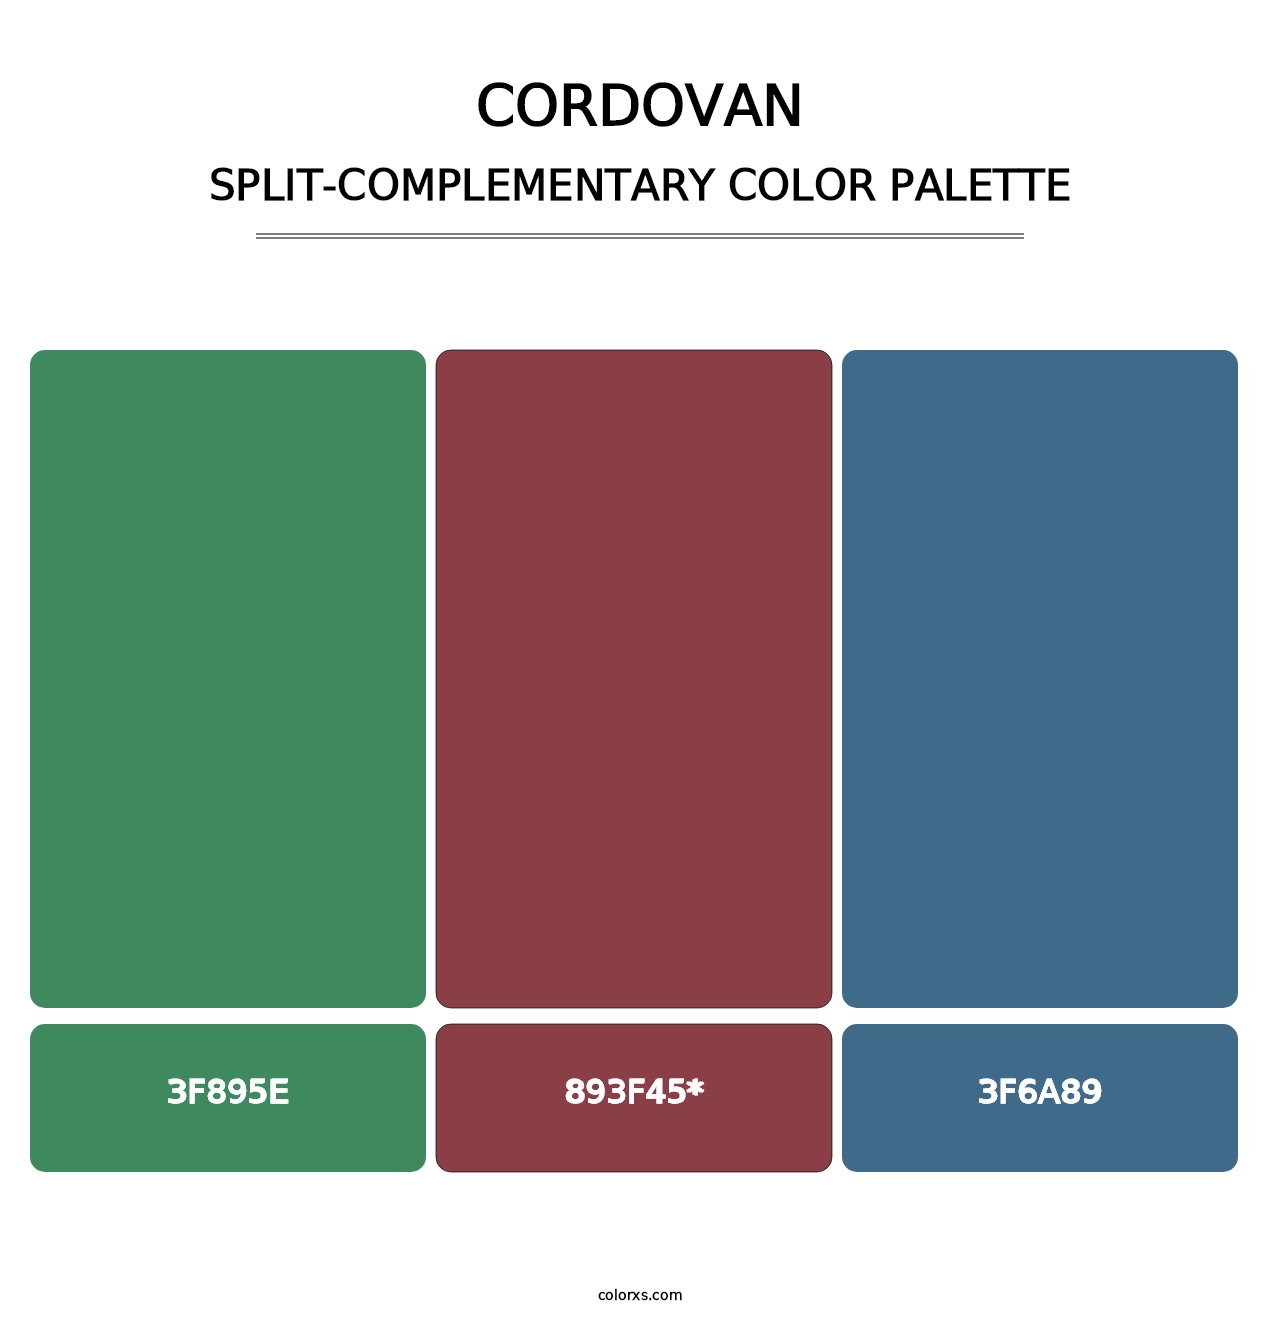 Cordovan - Split-Complementary Color Palette